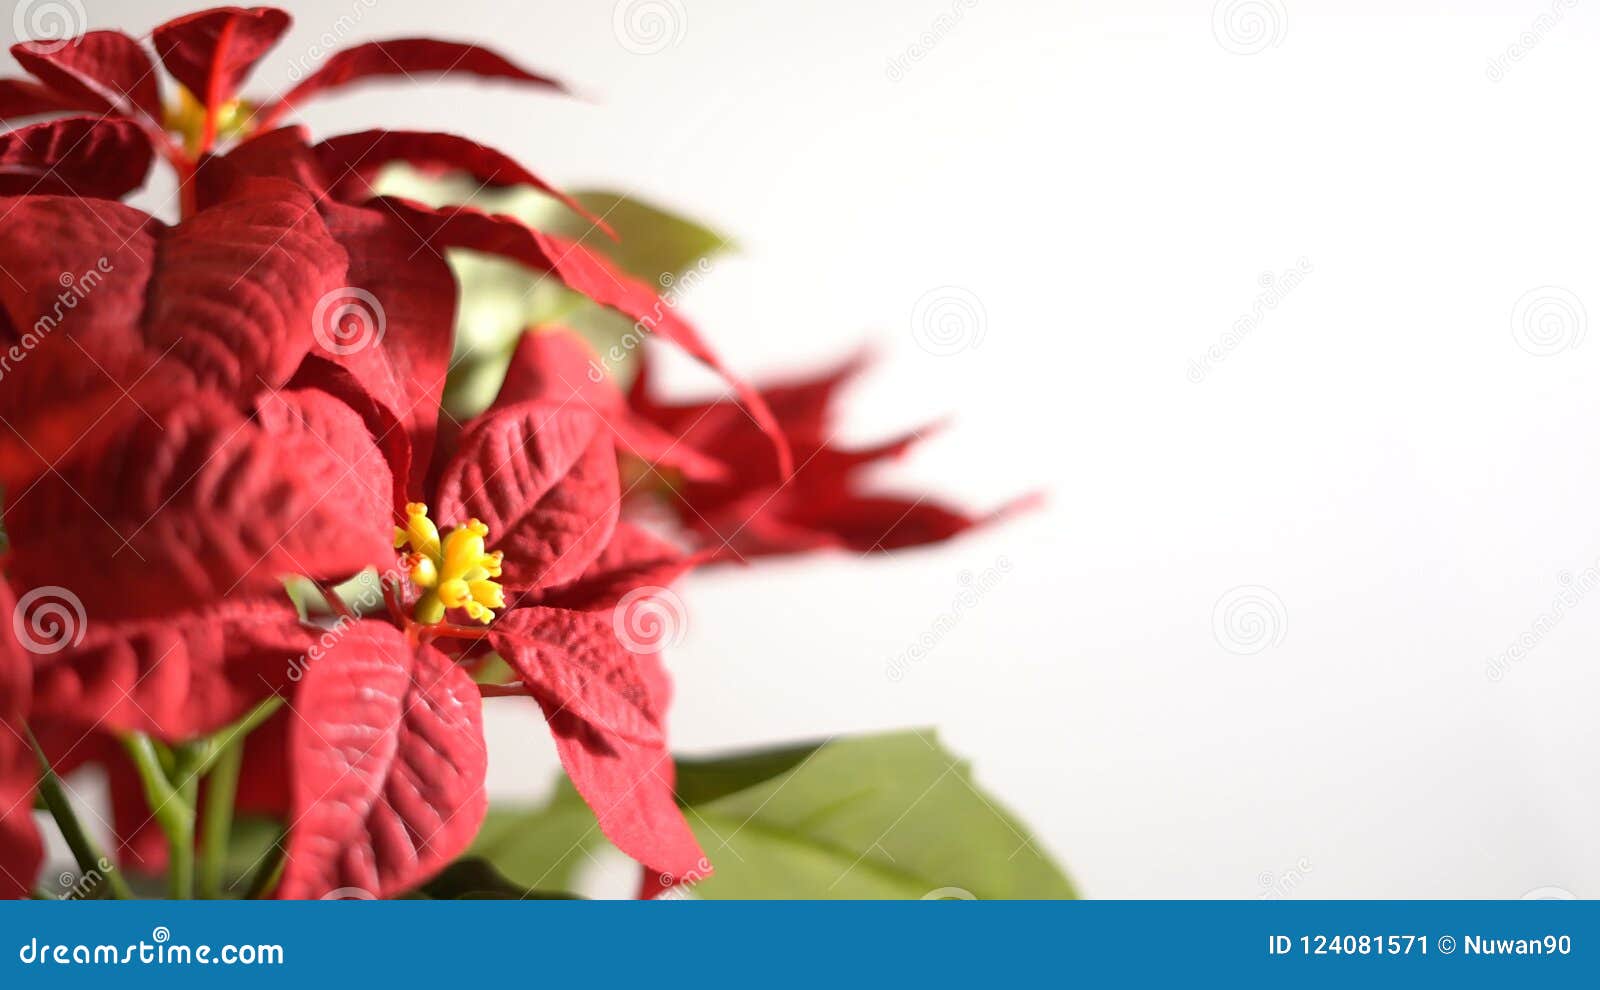 Red Poinsettia Christmas Flower on White Background Stock Video - Video ...